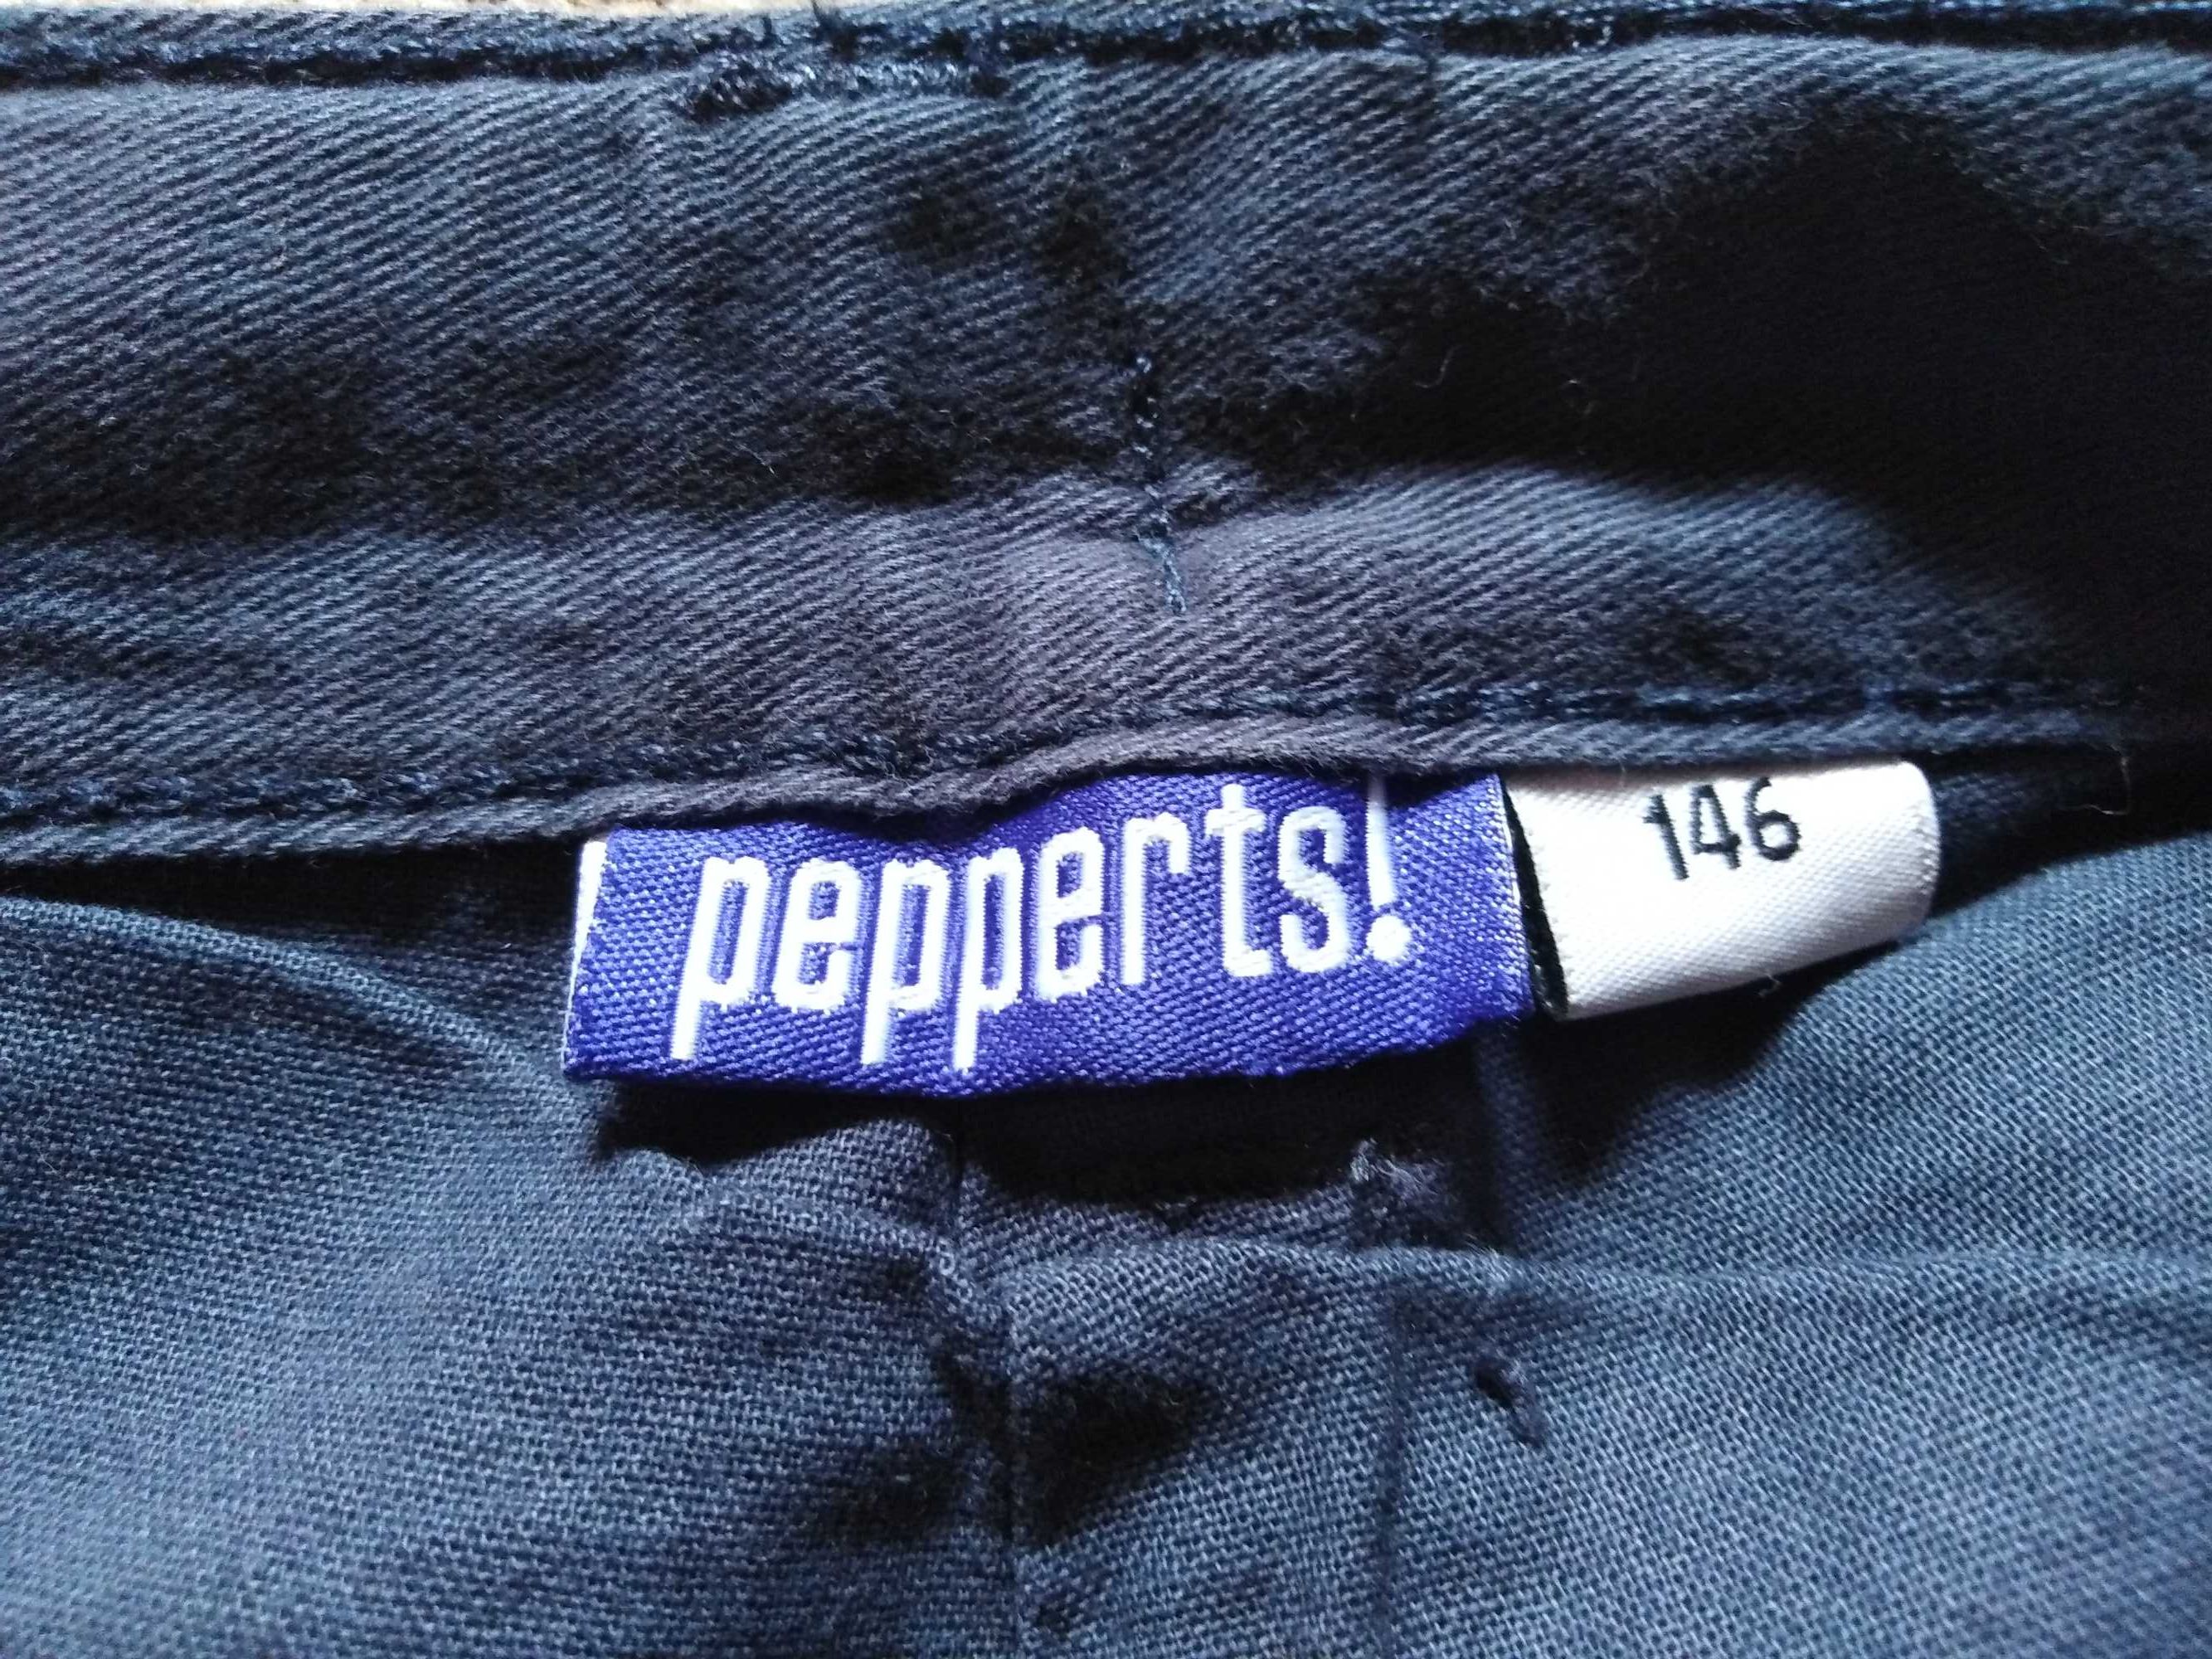 Pepperts lekko ocieplane spodnie r. 146-152 cm